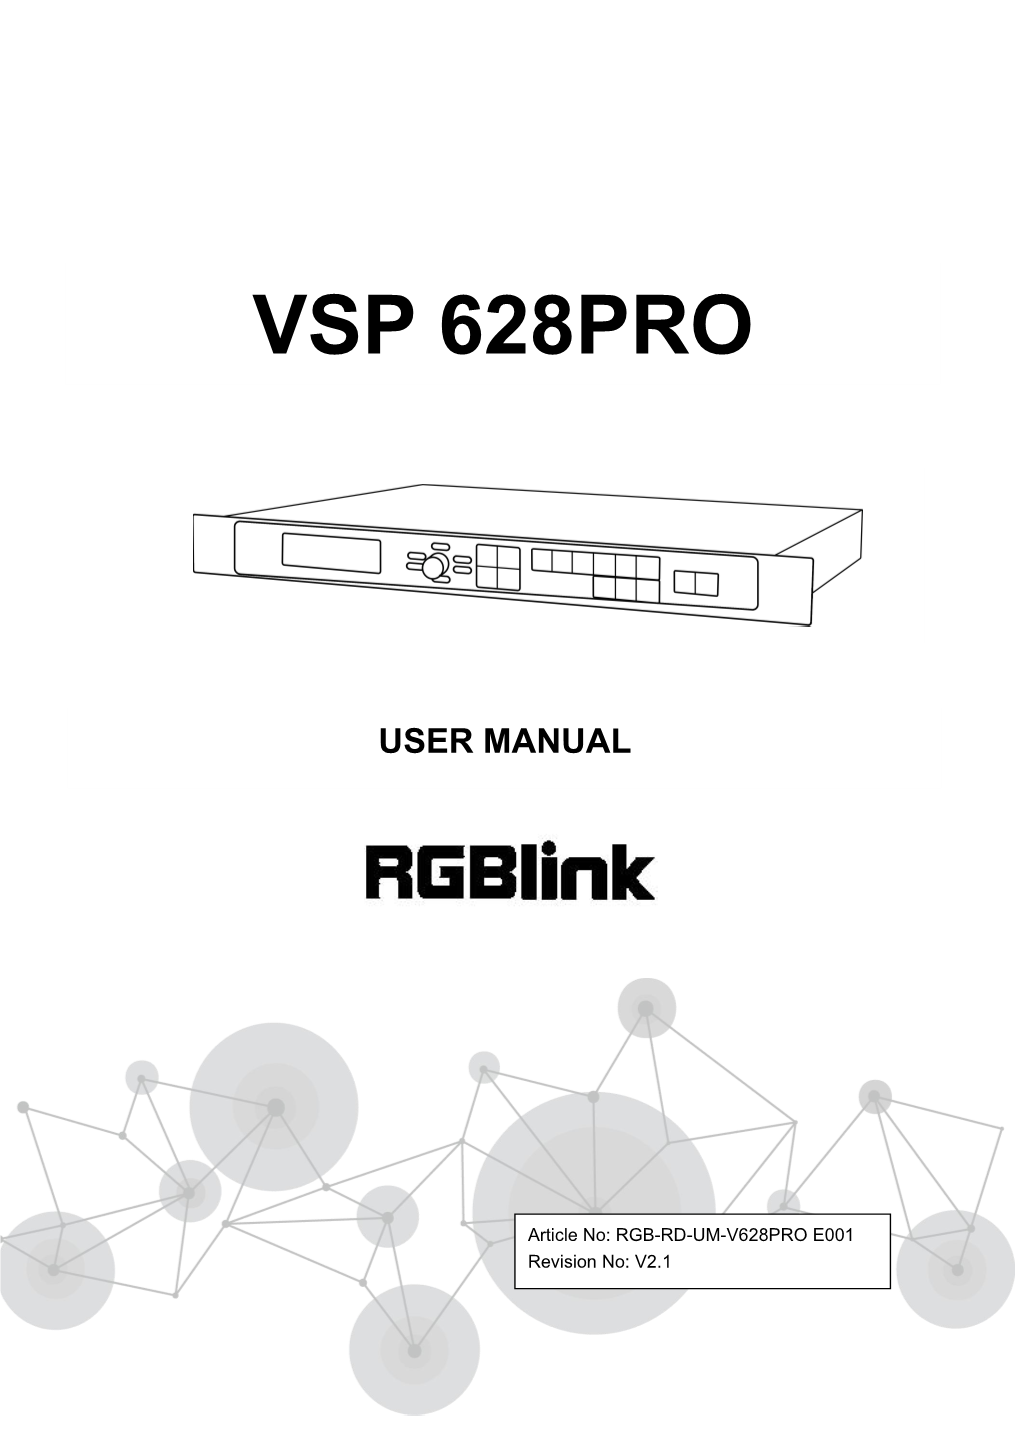 VSP 628PRO User Manual 1 3.8 Using LOGO Button